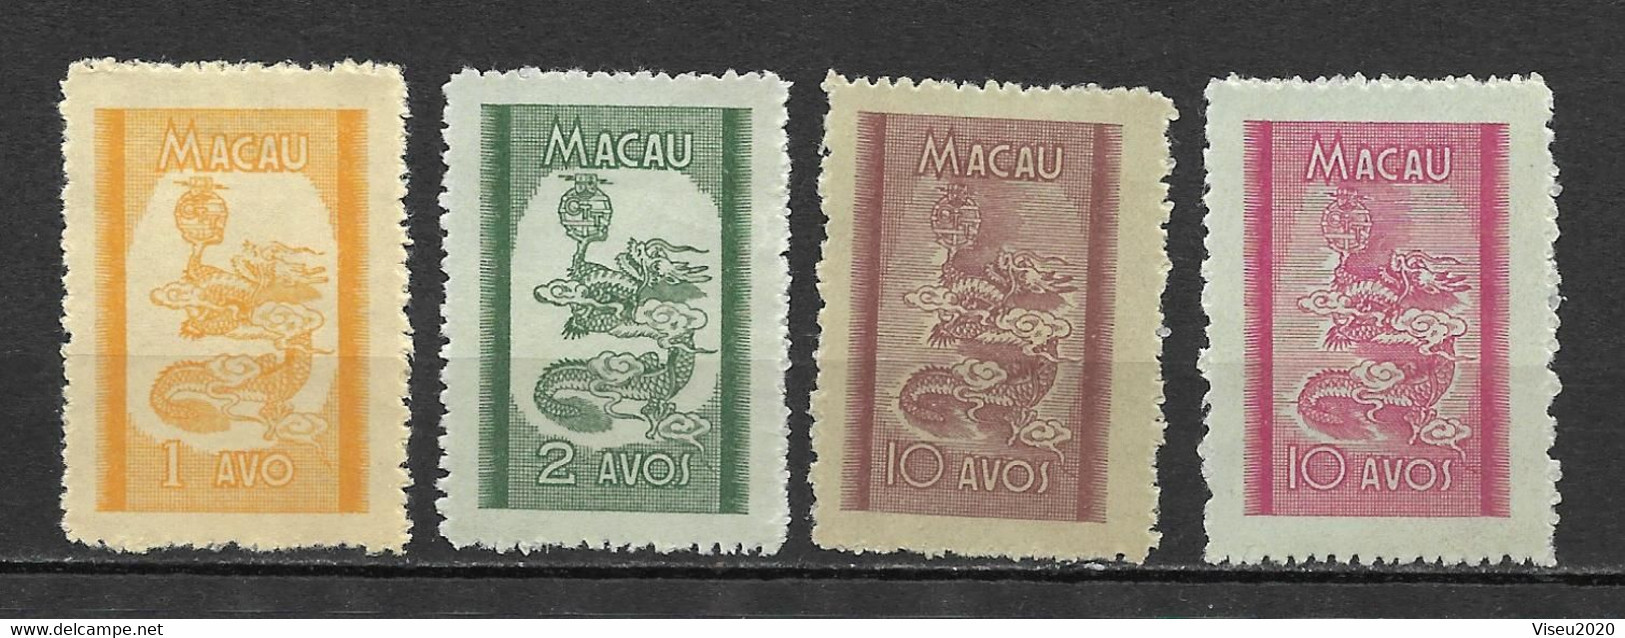 Portugal (Macau) 1950 – Dragões (Dragons) Emissão Local -  Complet Set Macao - Ongebruikt